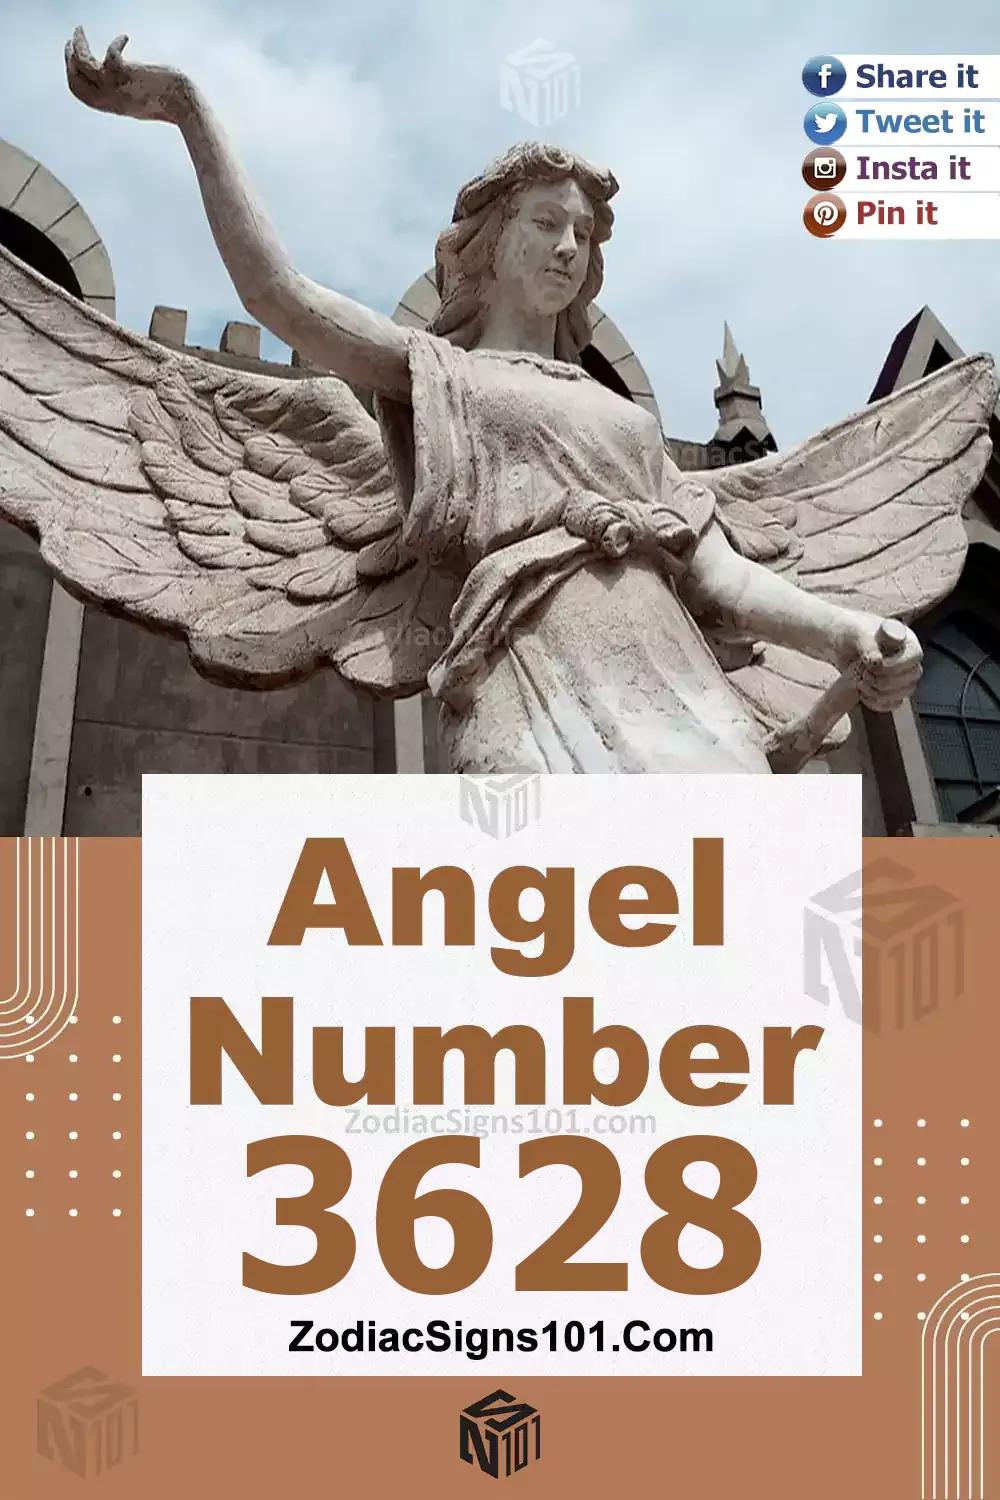 3628-Angel-Number-Meaning.jpg